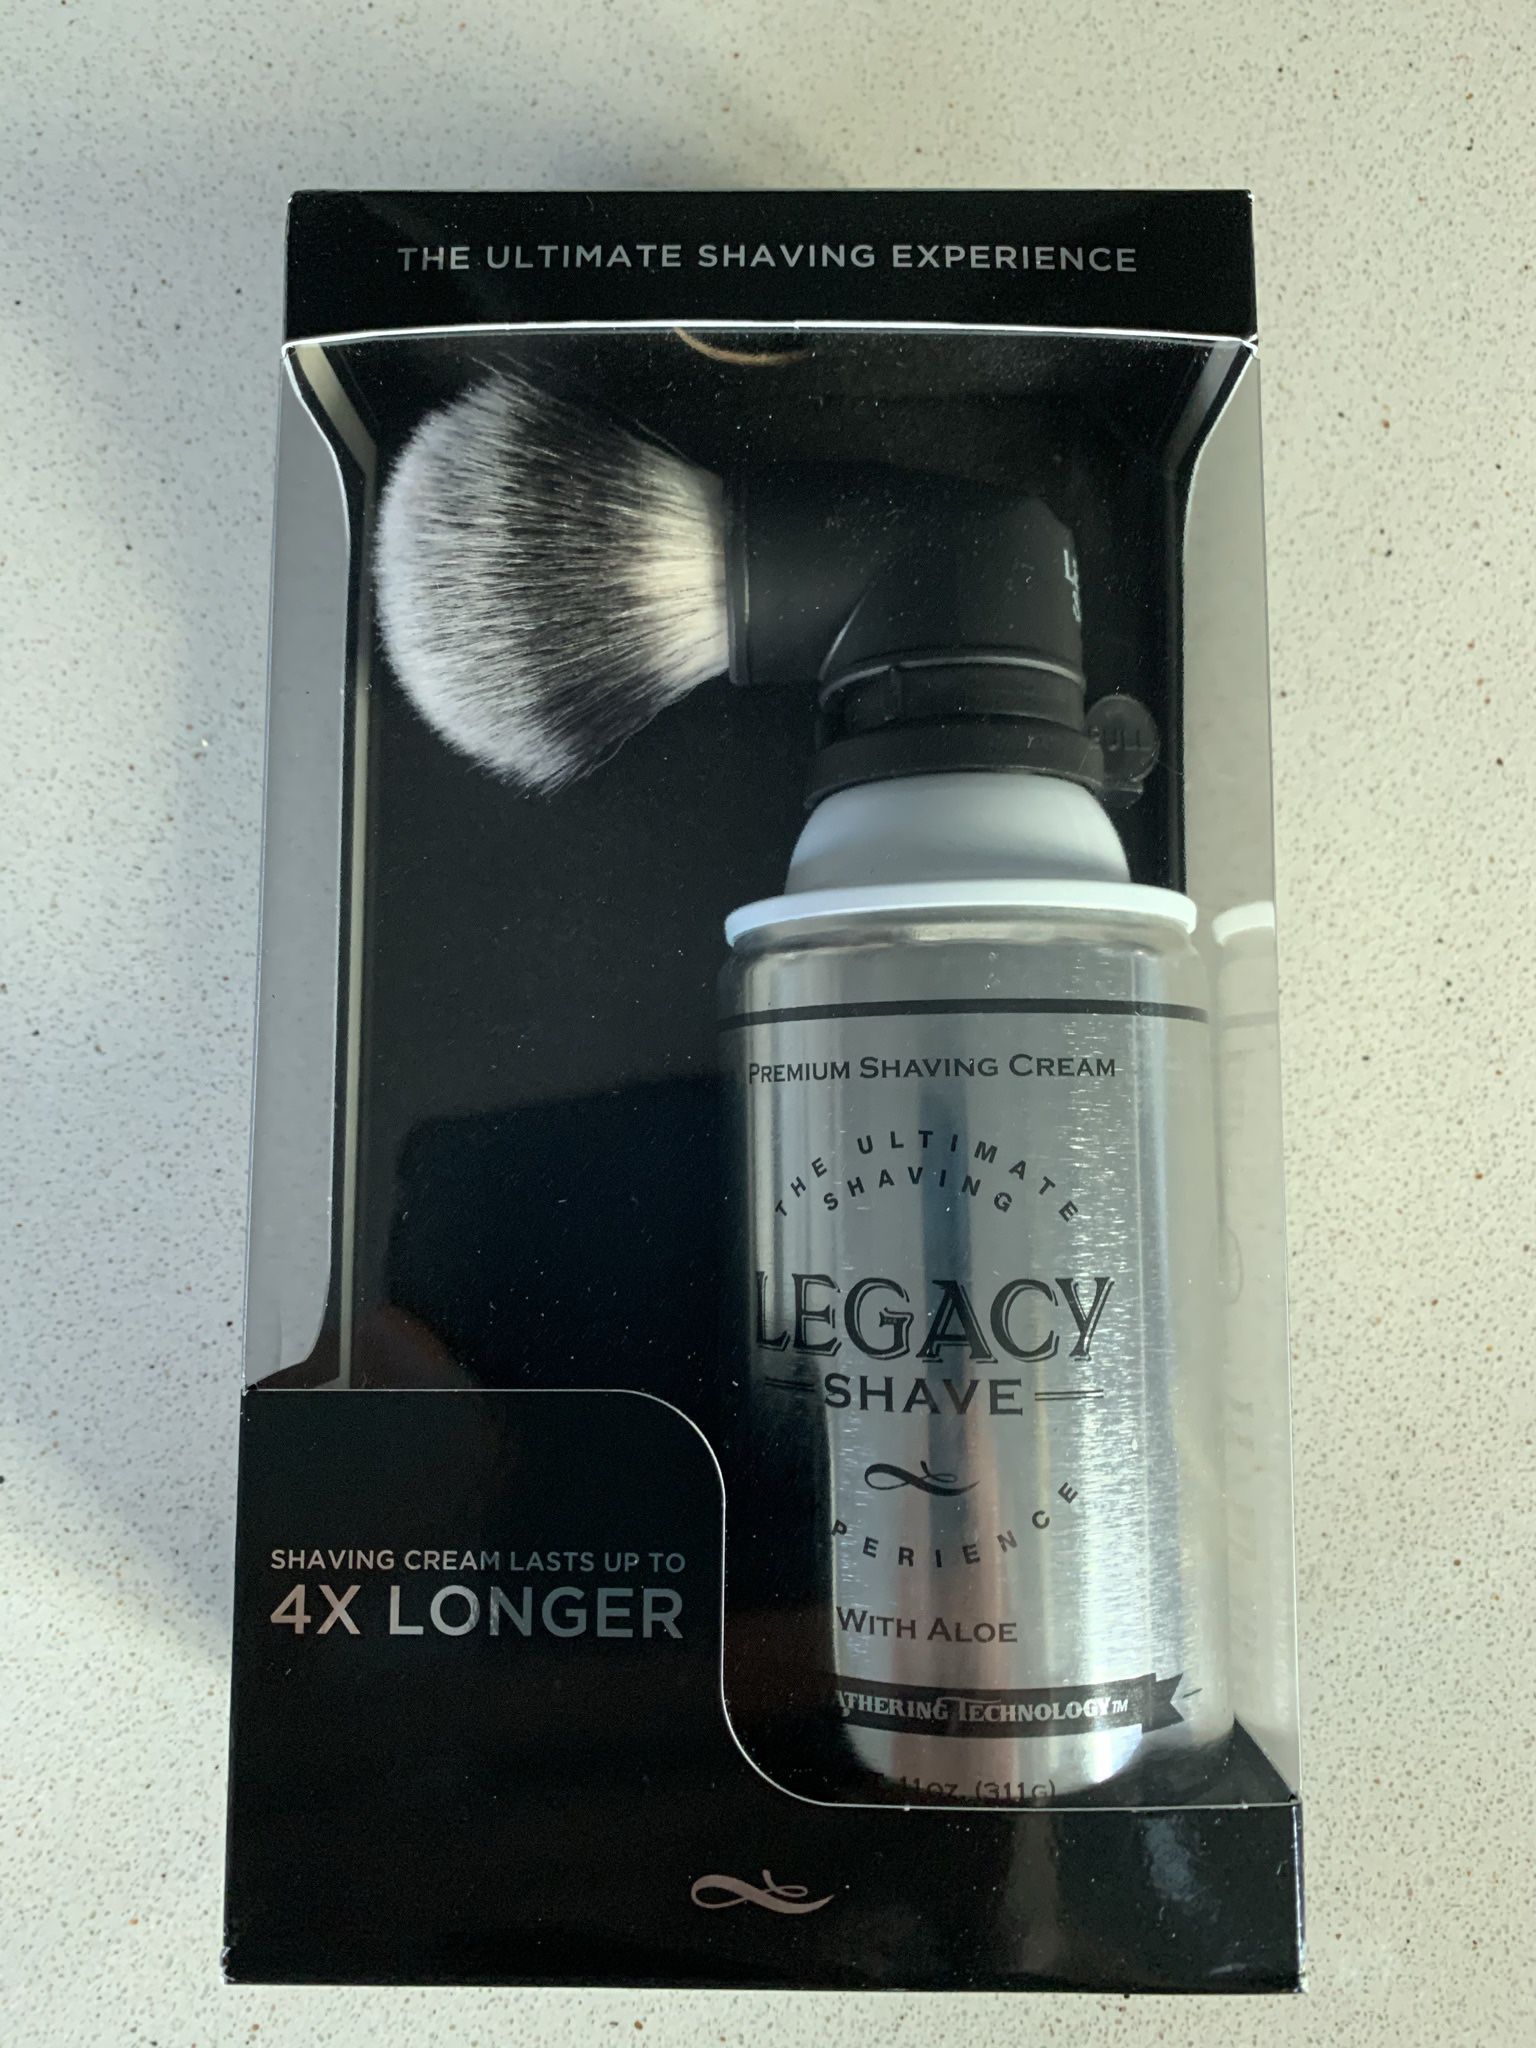 Brand New Shaving Cream & Razor Gift Set All-In-One - Pick Up From Brickell (33131)